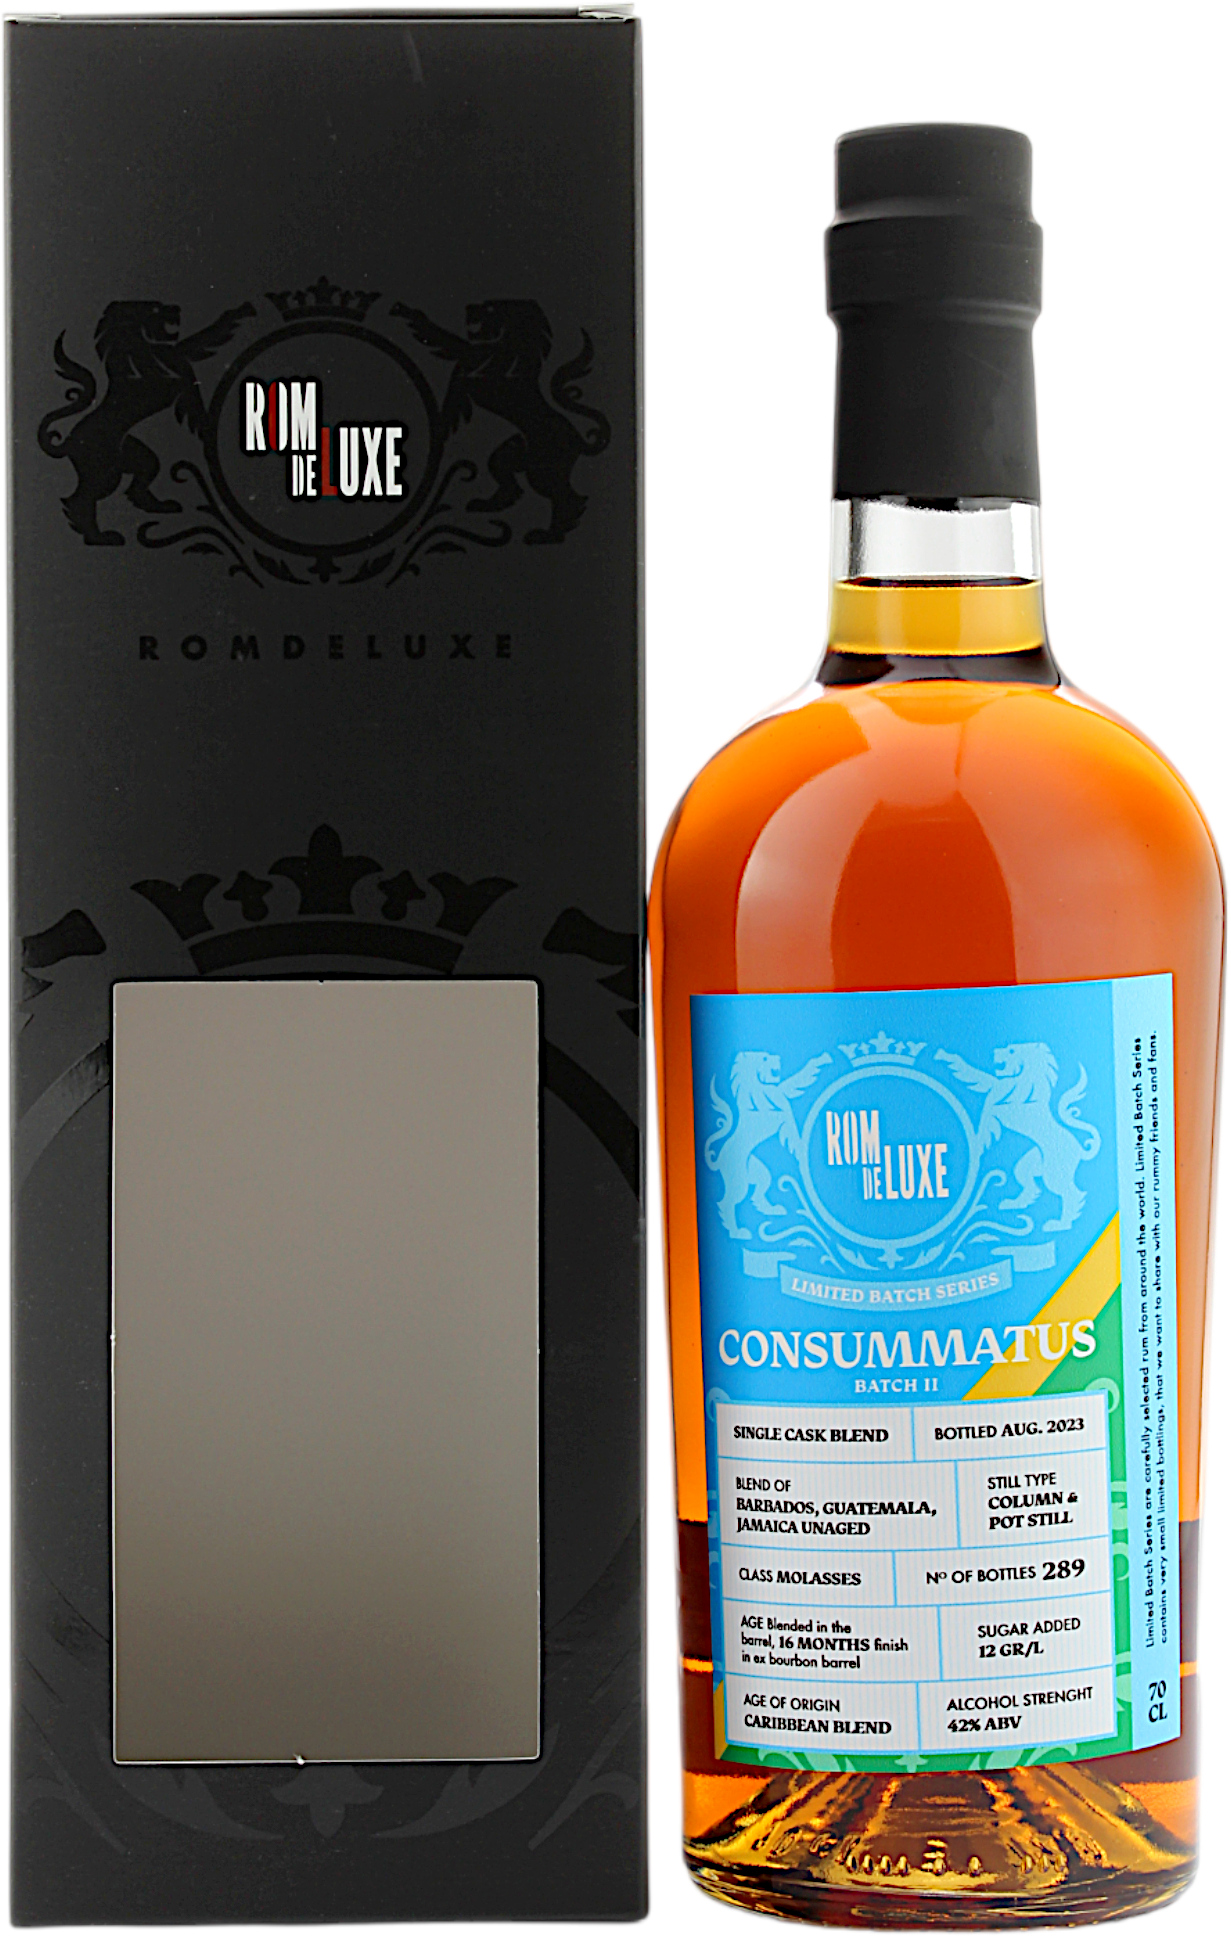 Consummatus Caribbean Single Cask Blend RomDeLuxe 42.0% 0,7l